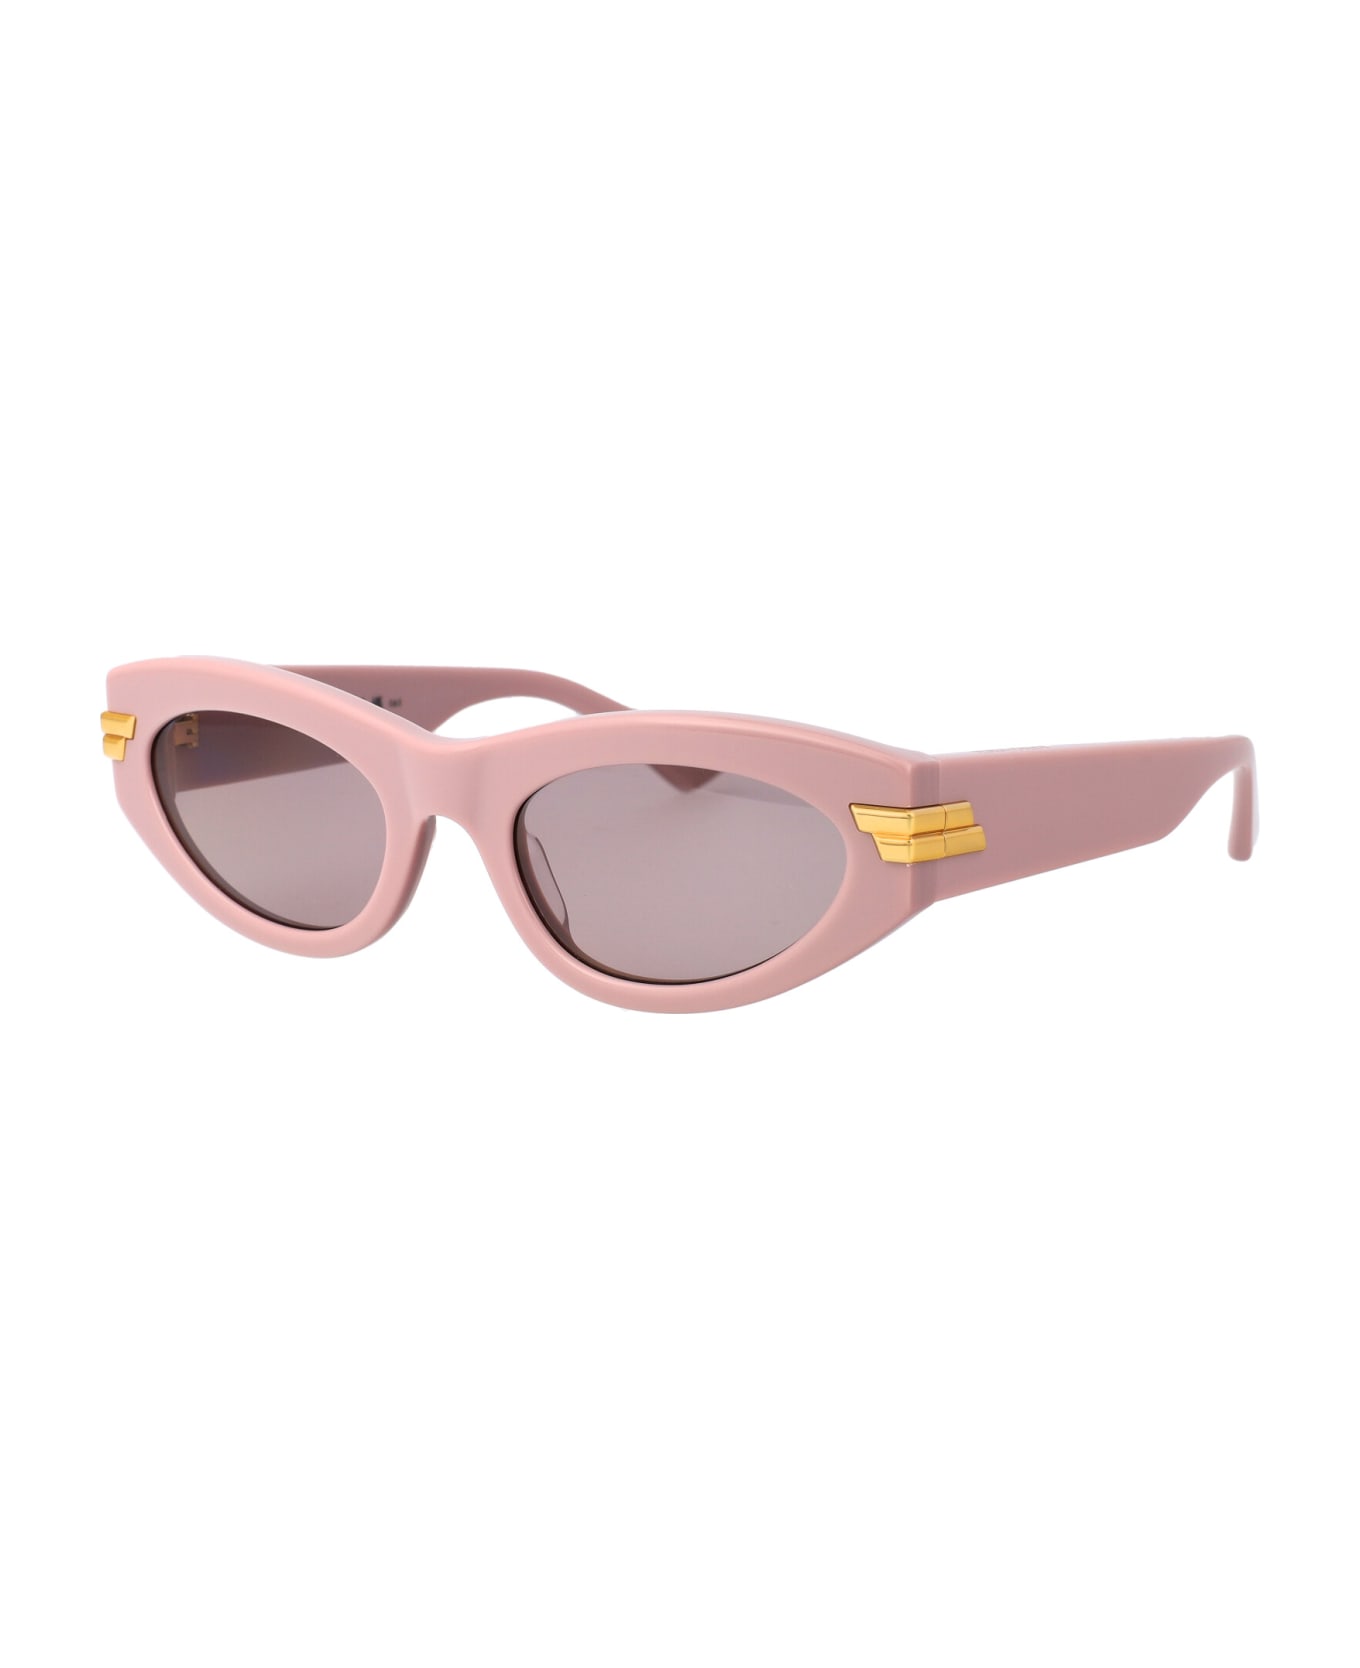 Bottega Veneta Eyewear Bv1189s Sunglasses - 006 PINK PINK VIOLET サングラス